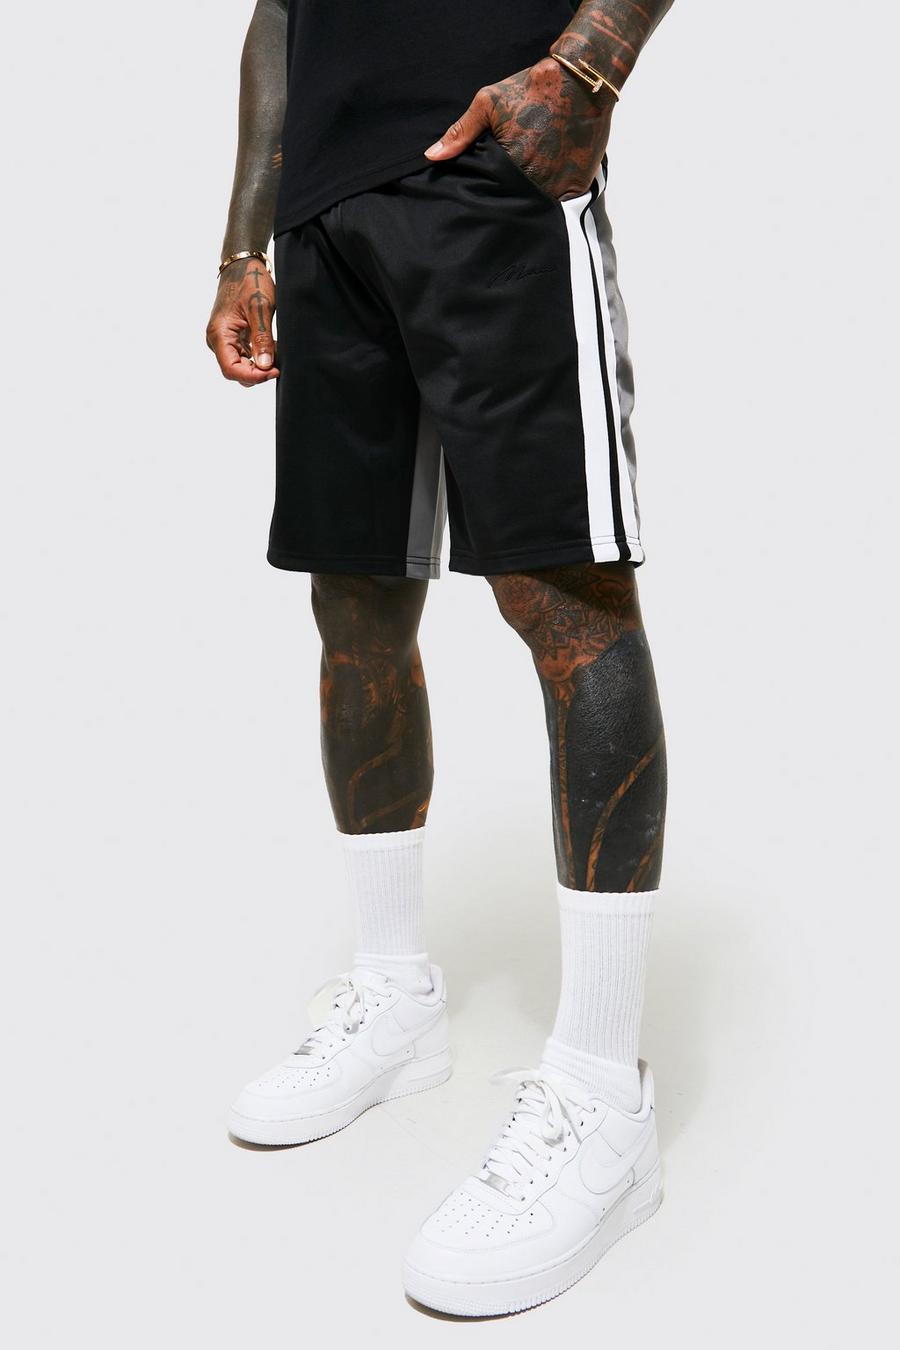 Pantalón corto holgado MAN dividido con cinta de tejido por urdimbre, Black negro